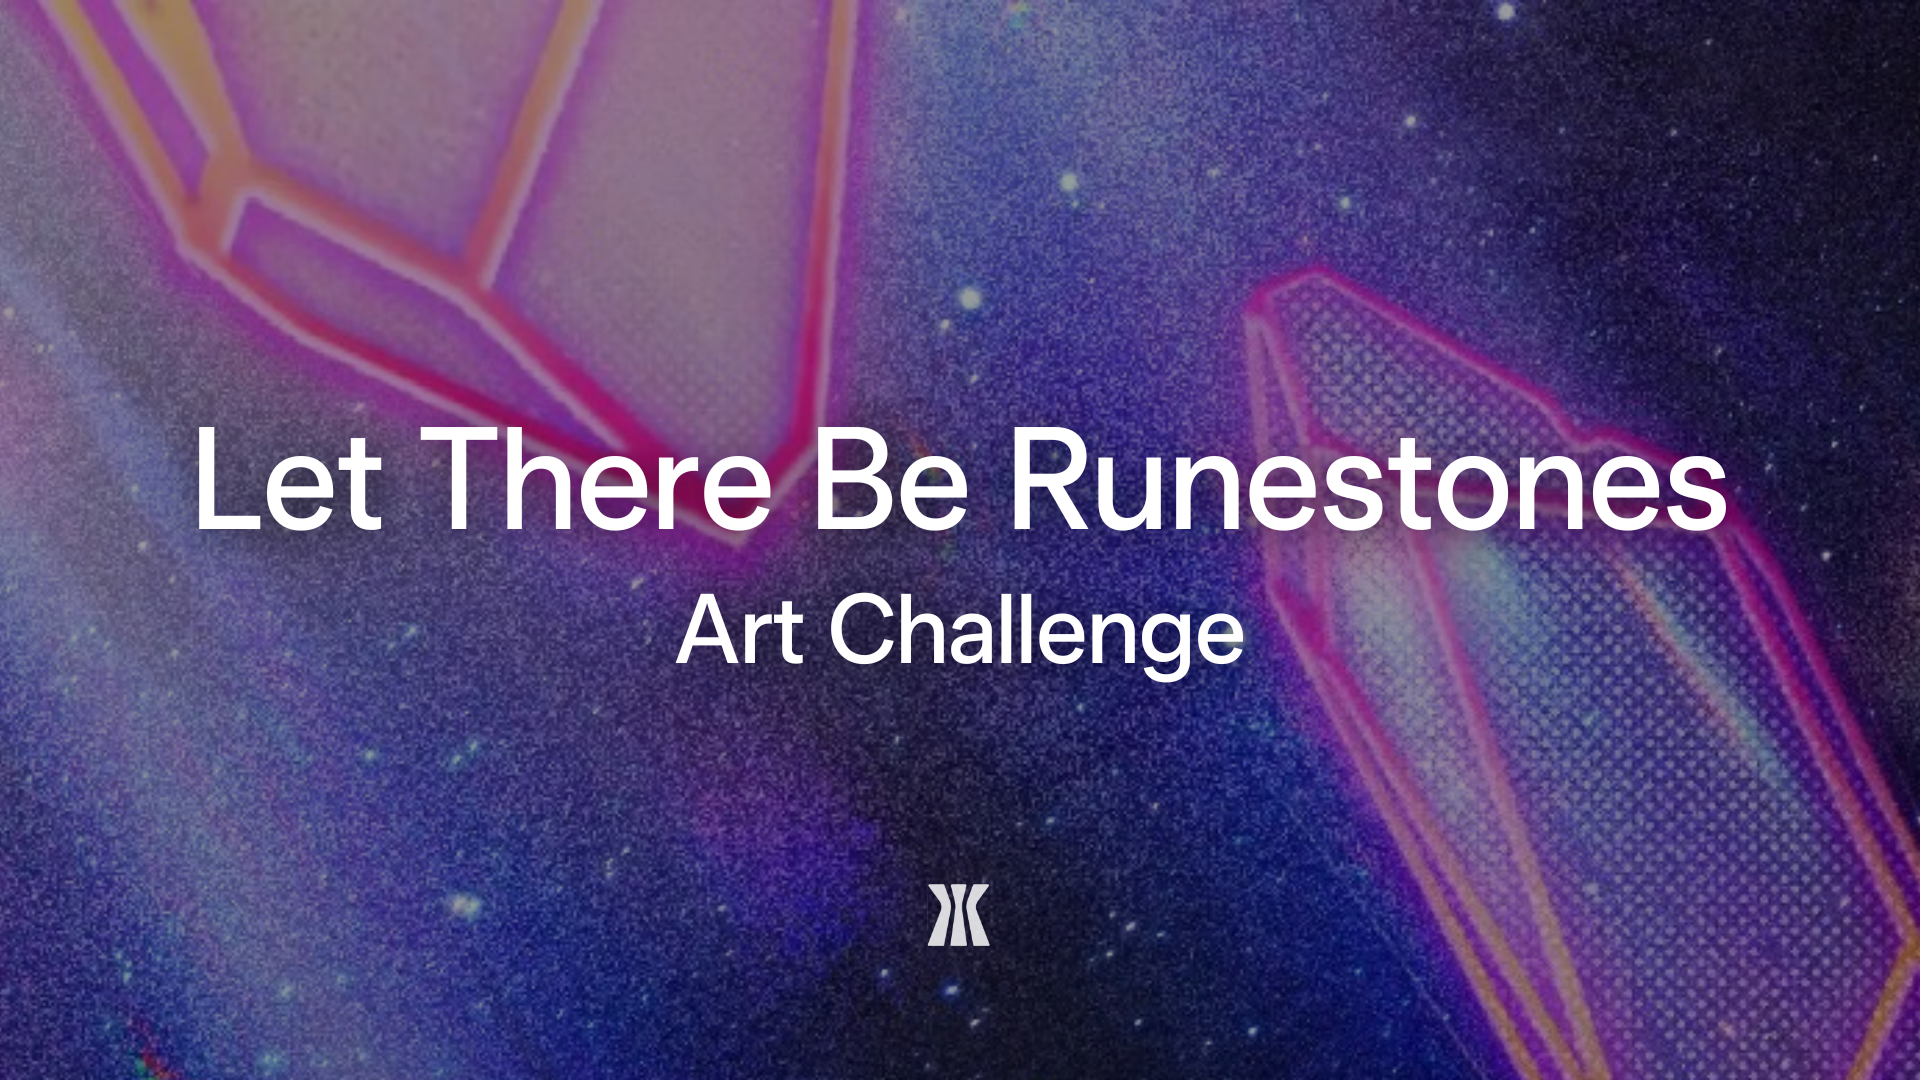 Let There Be Runestones, Art Challenge